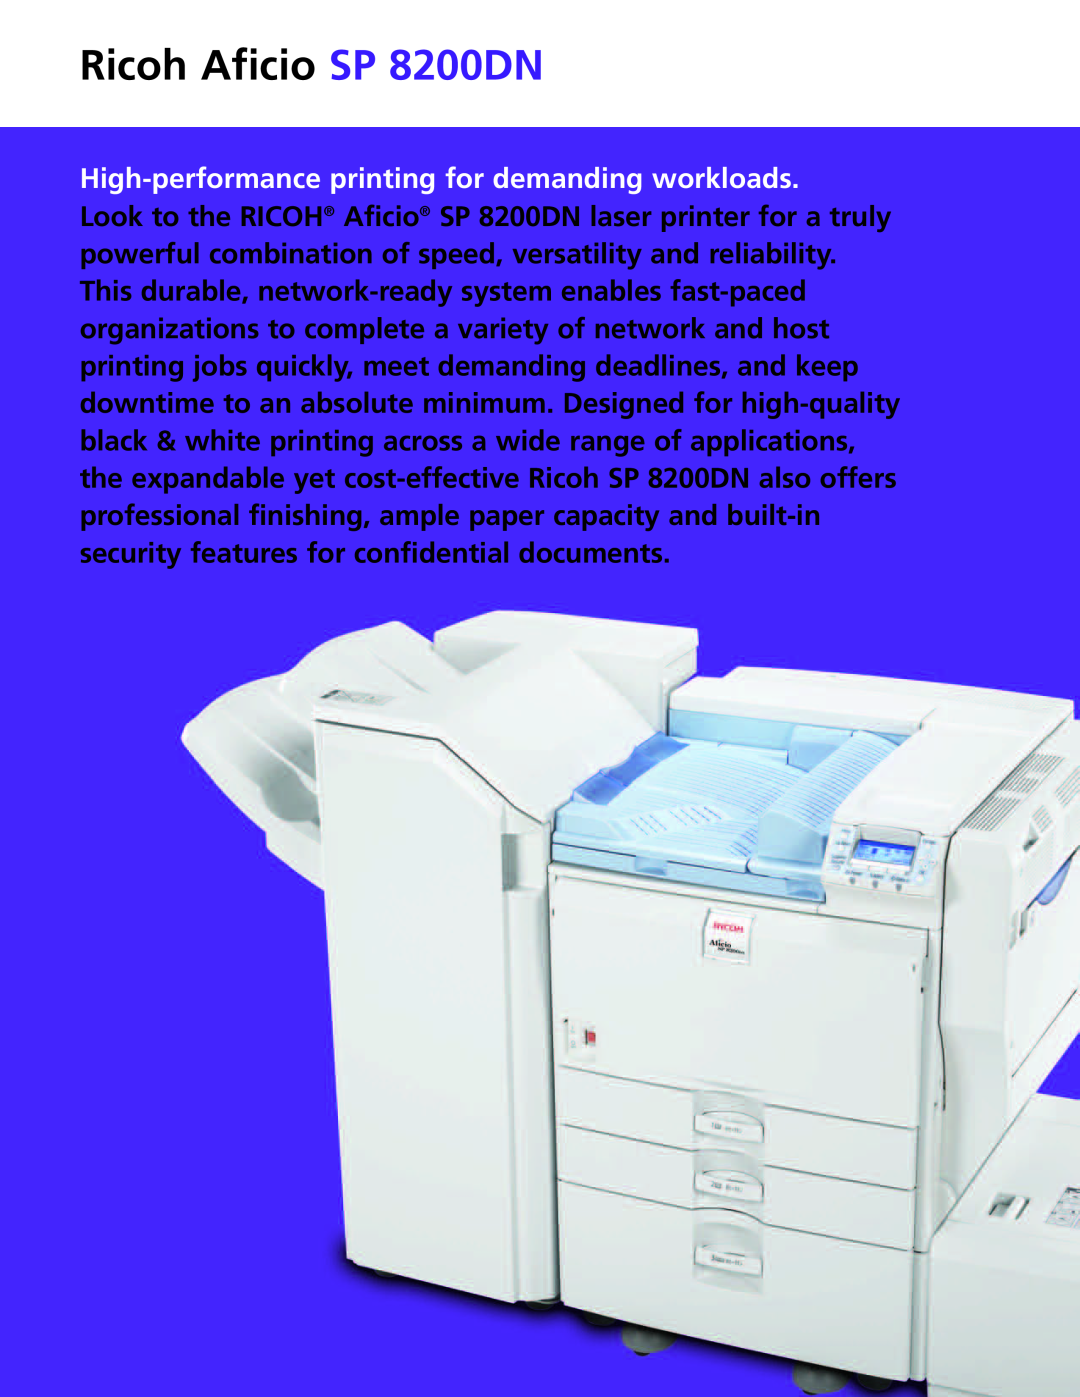 Ricoh manual Ricoh Aficio SP 8200DN, High-performance printing for demanding workloads 